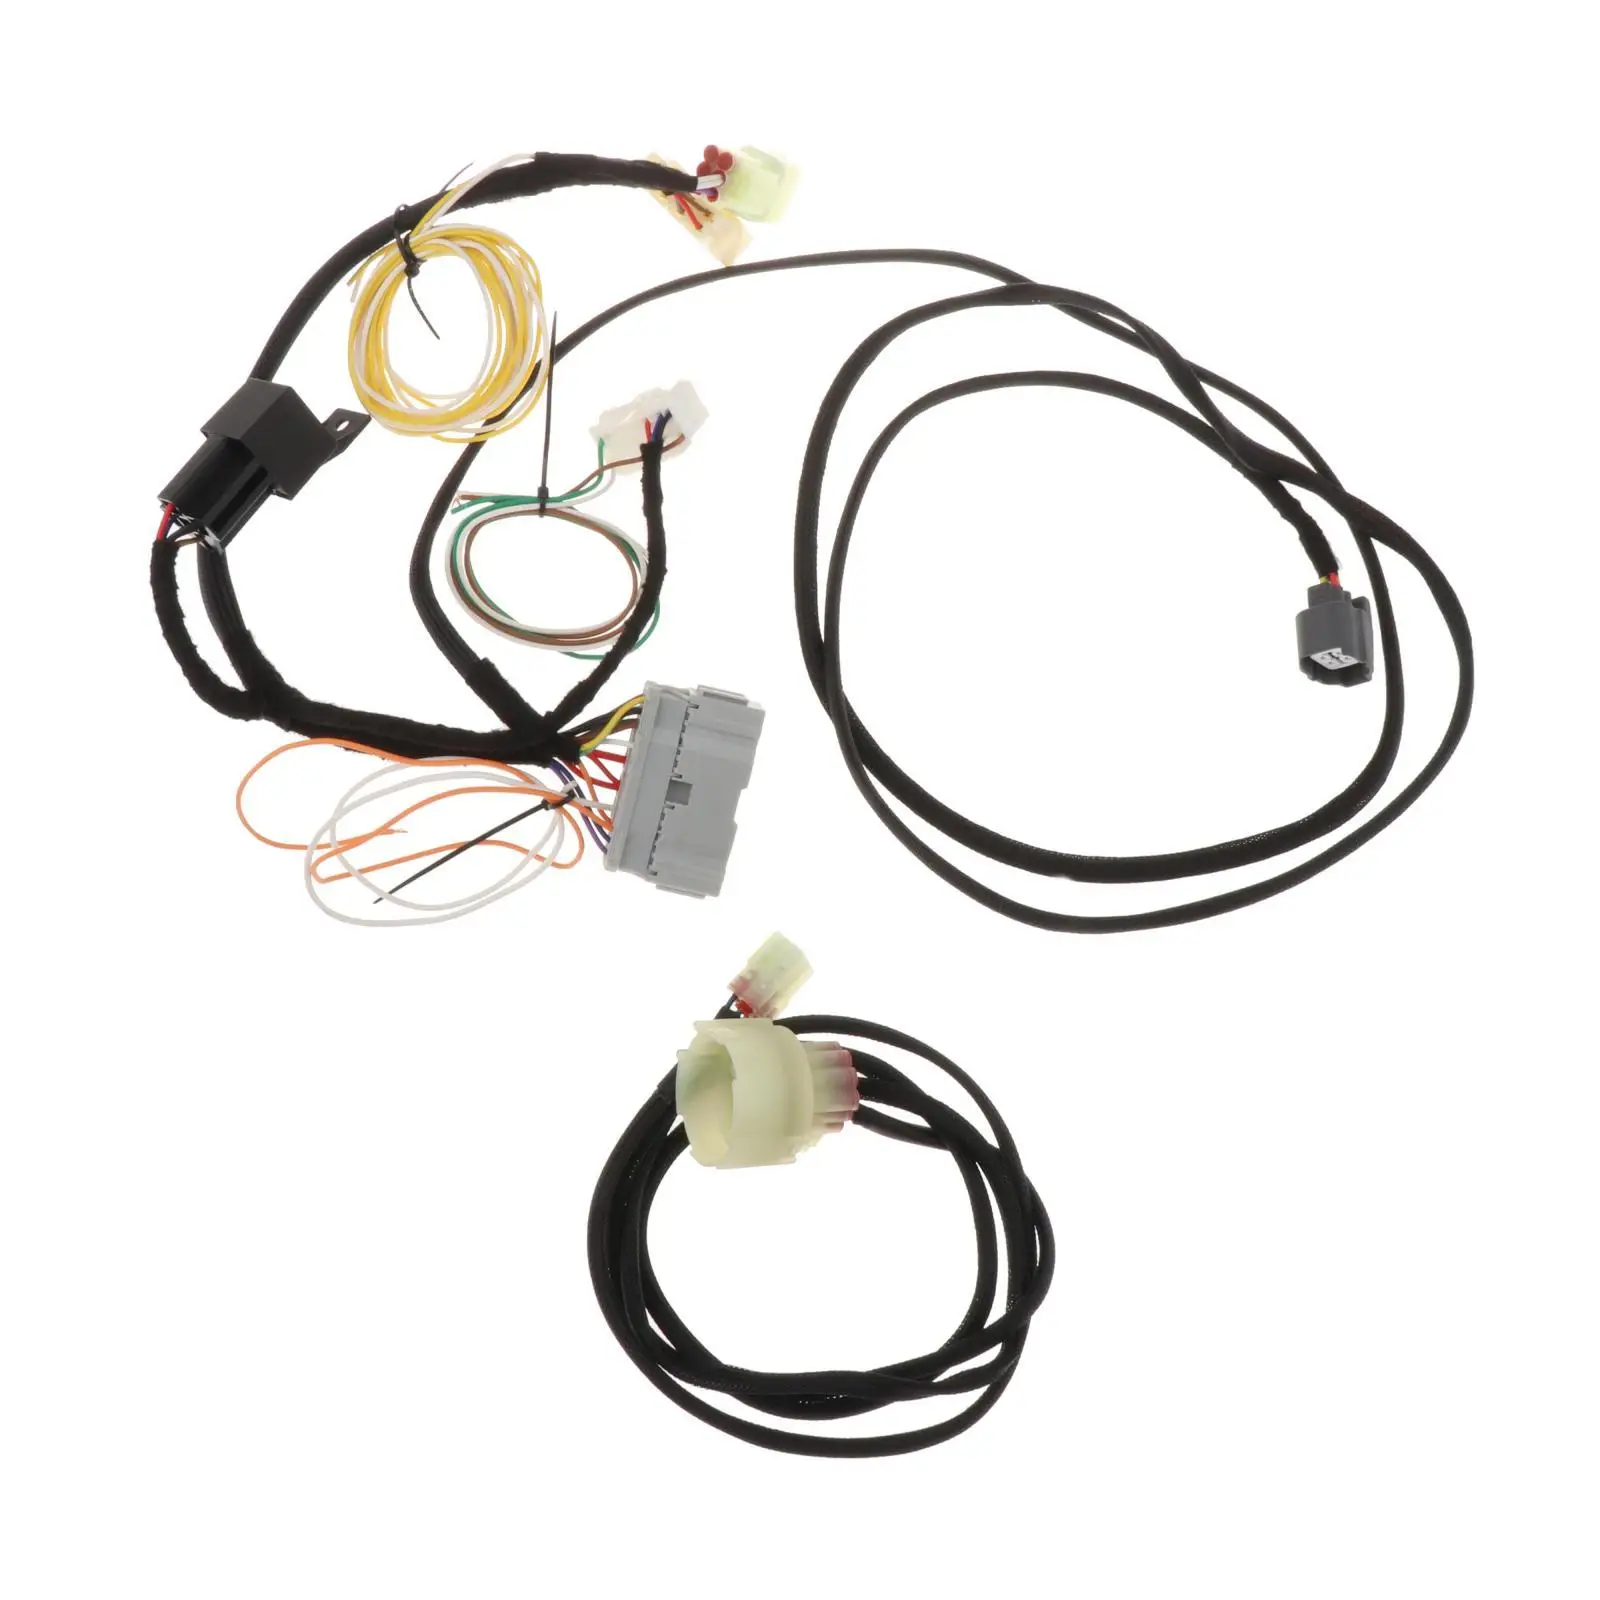 Professional Swap ECU Conversion Harness K20A K20A2 K24 for Civic & CRX,Plug